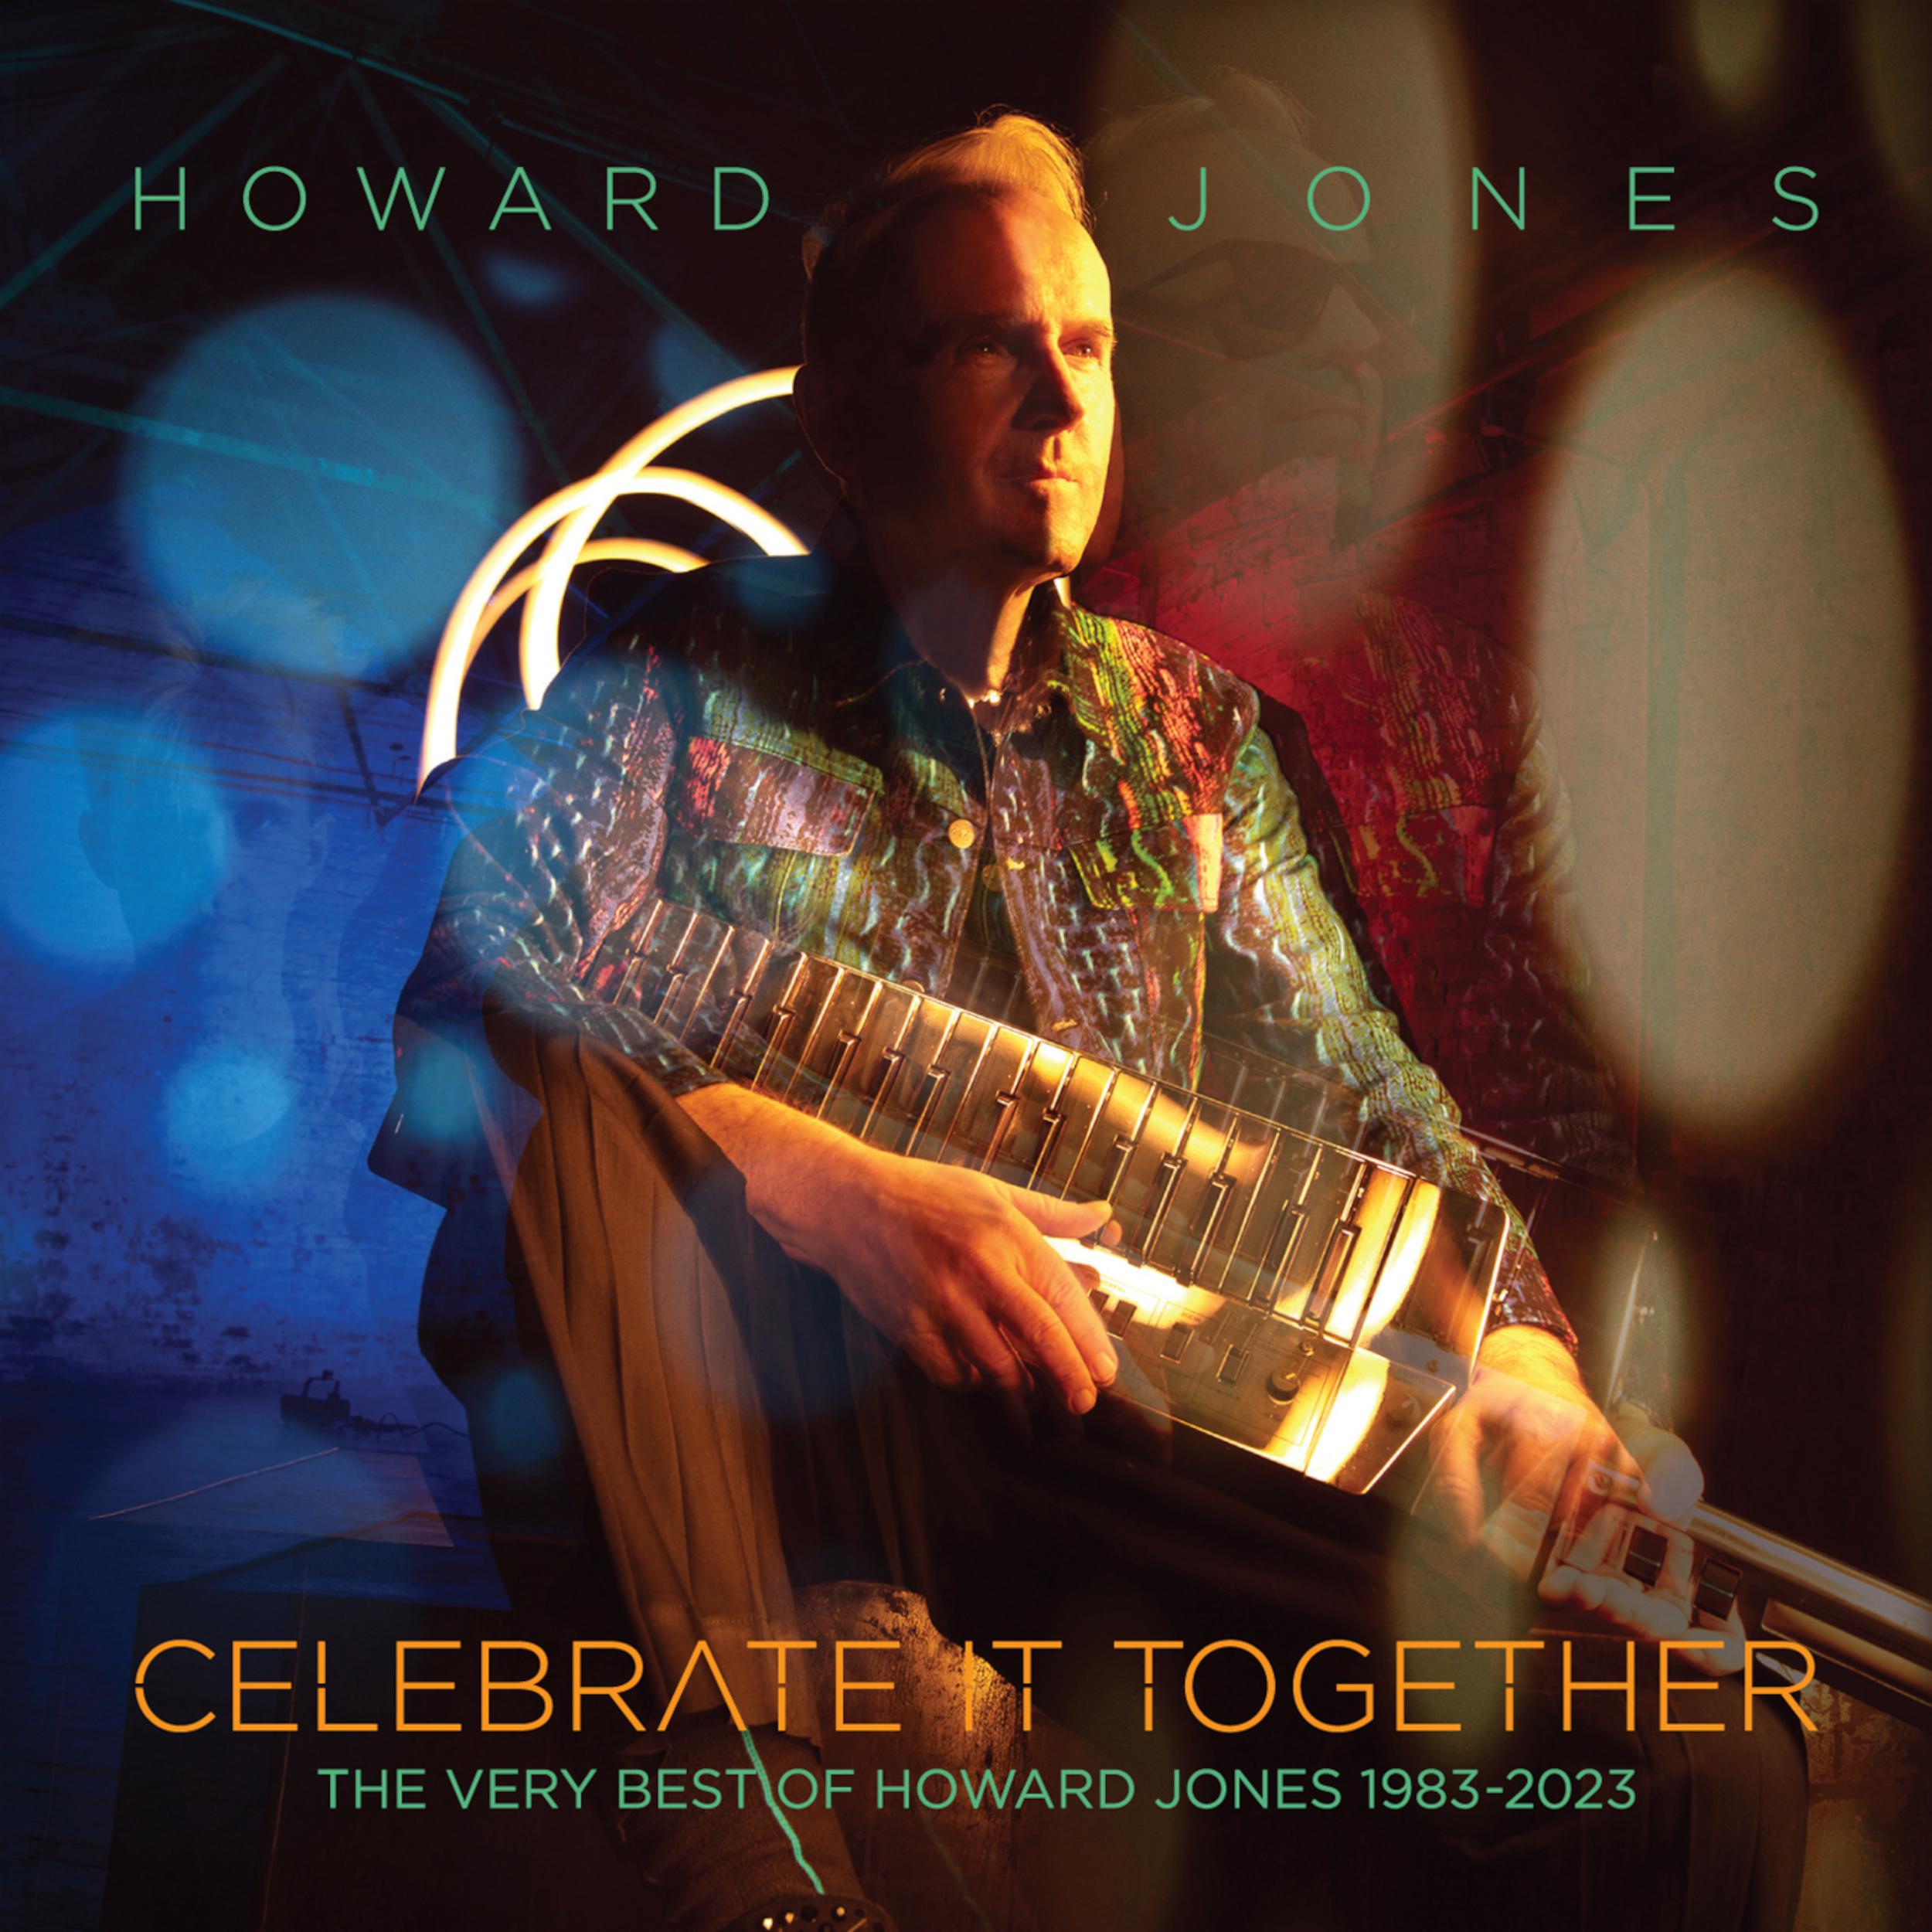 Howard Jones - I Don't Hate You